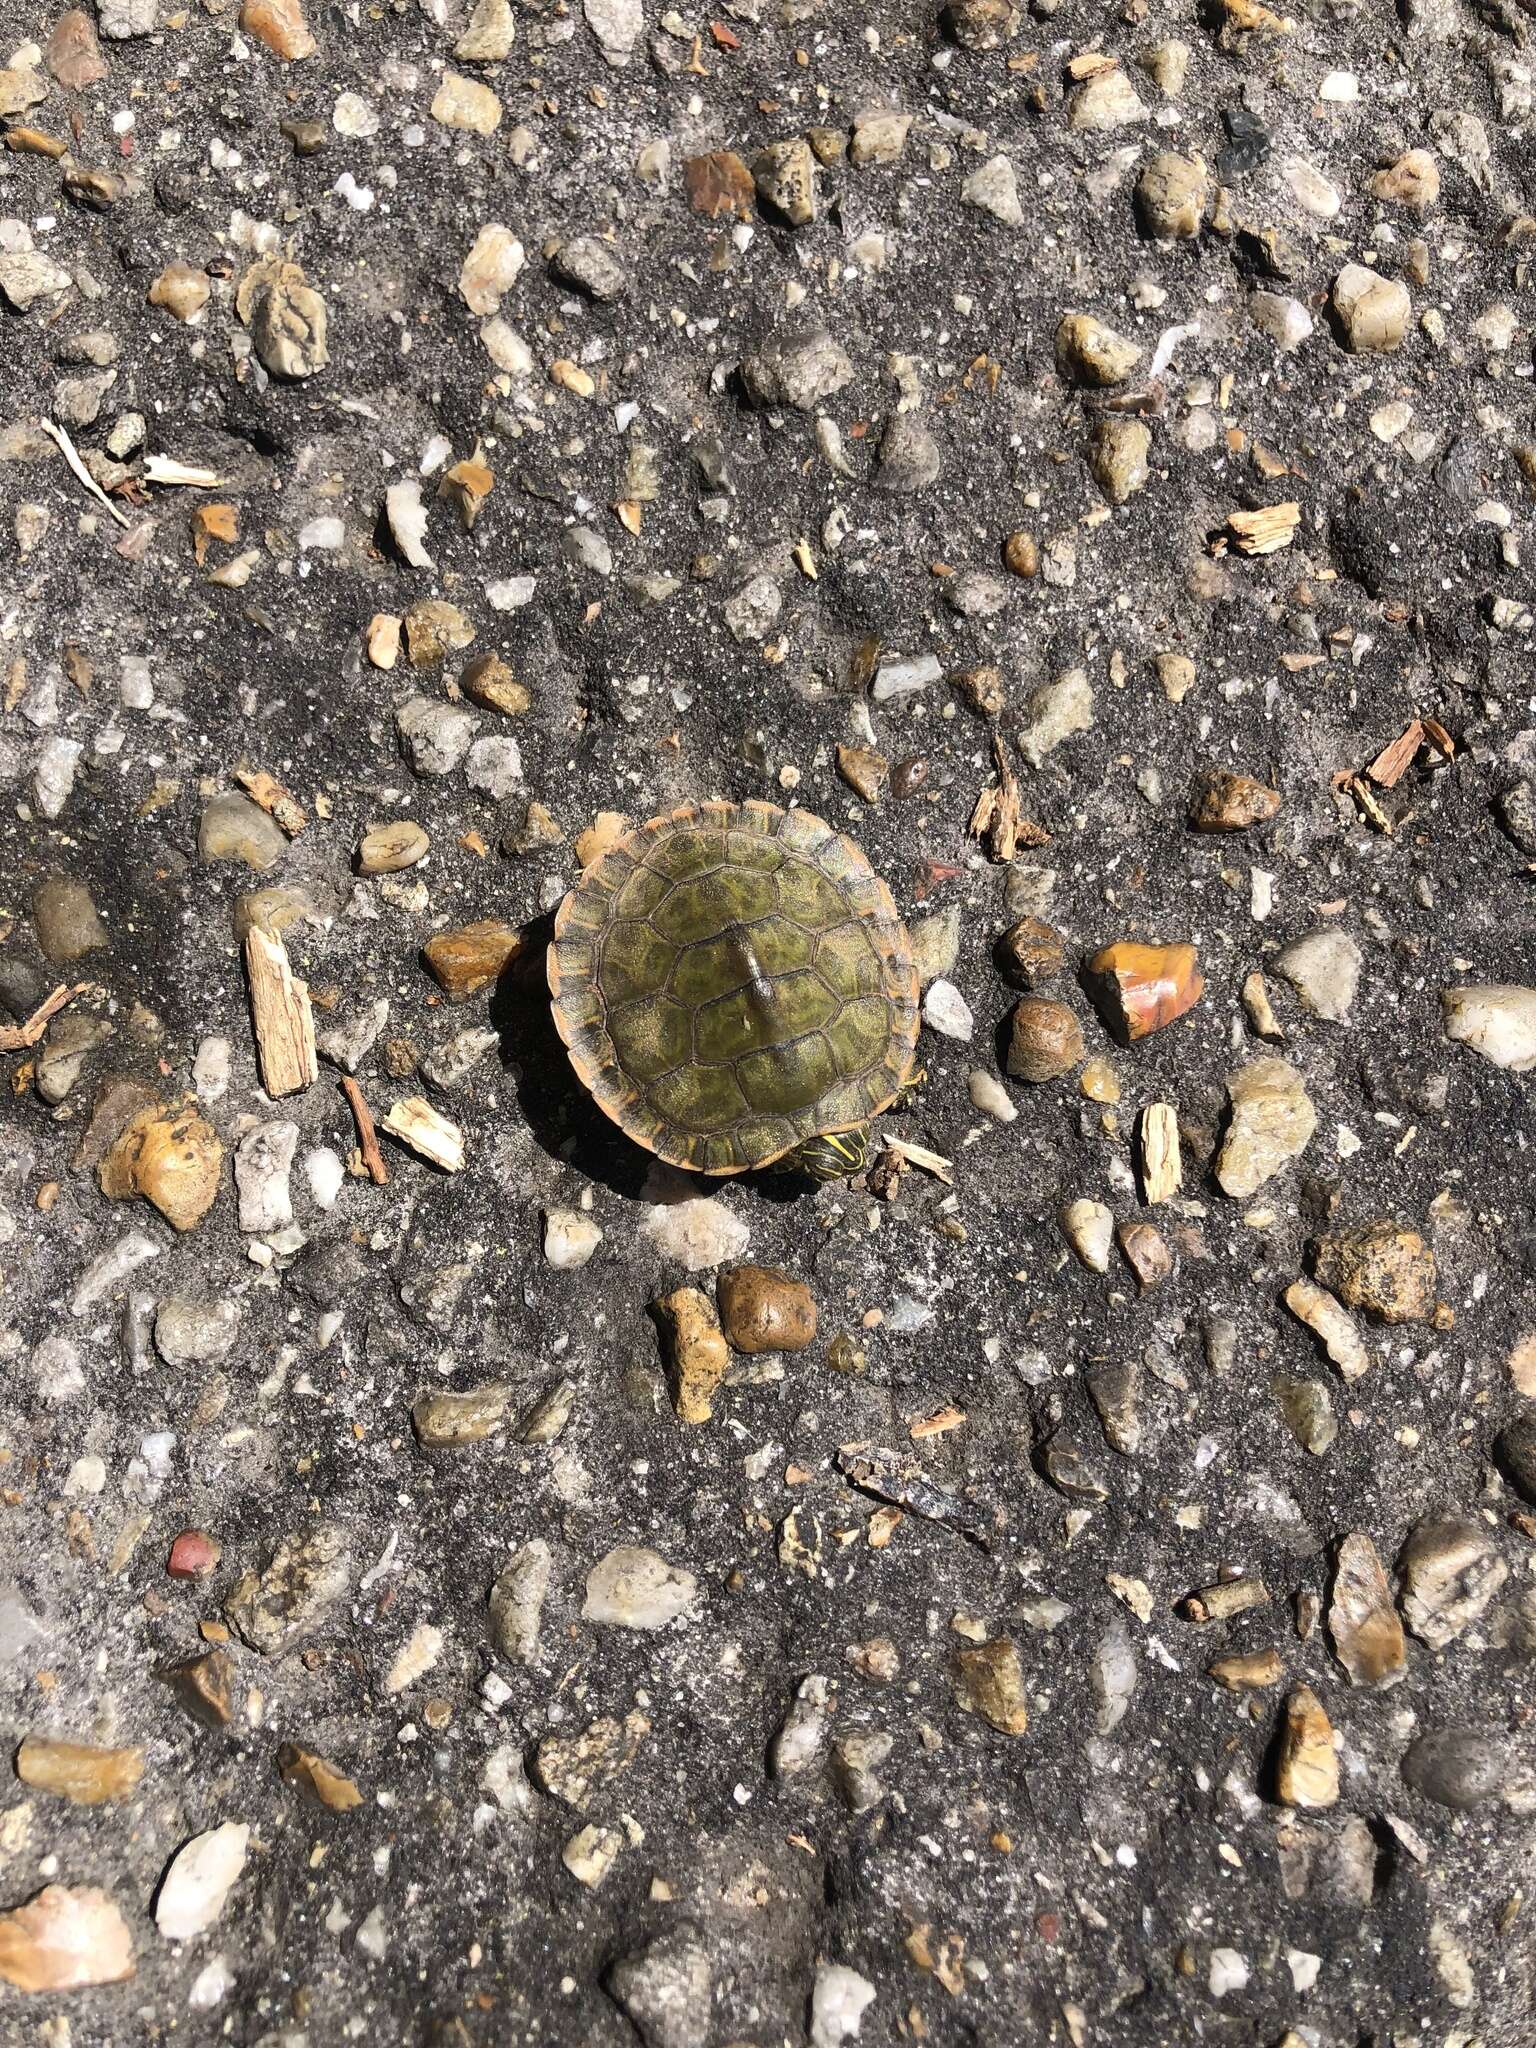 Image of Alabama Redbelly Turtle